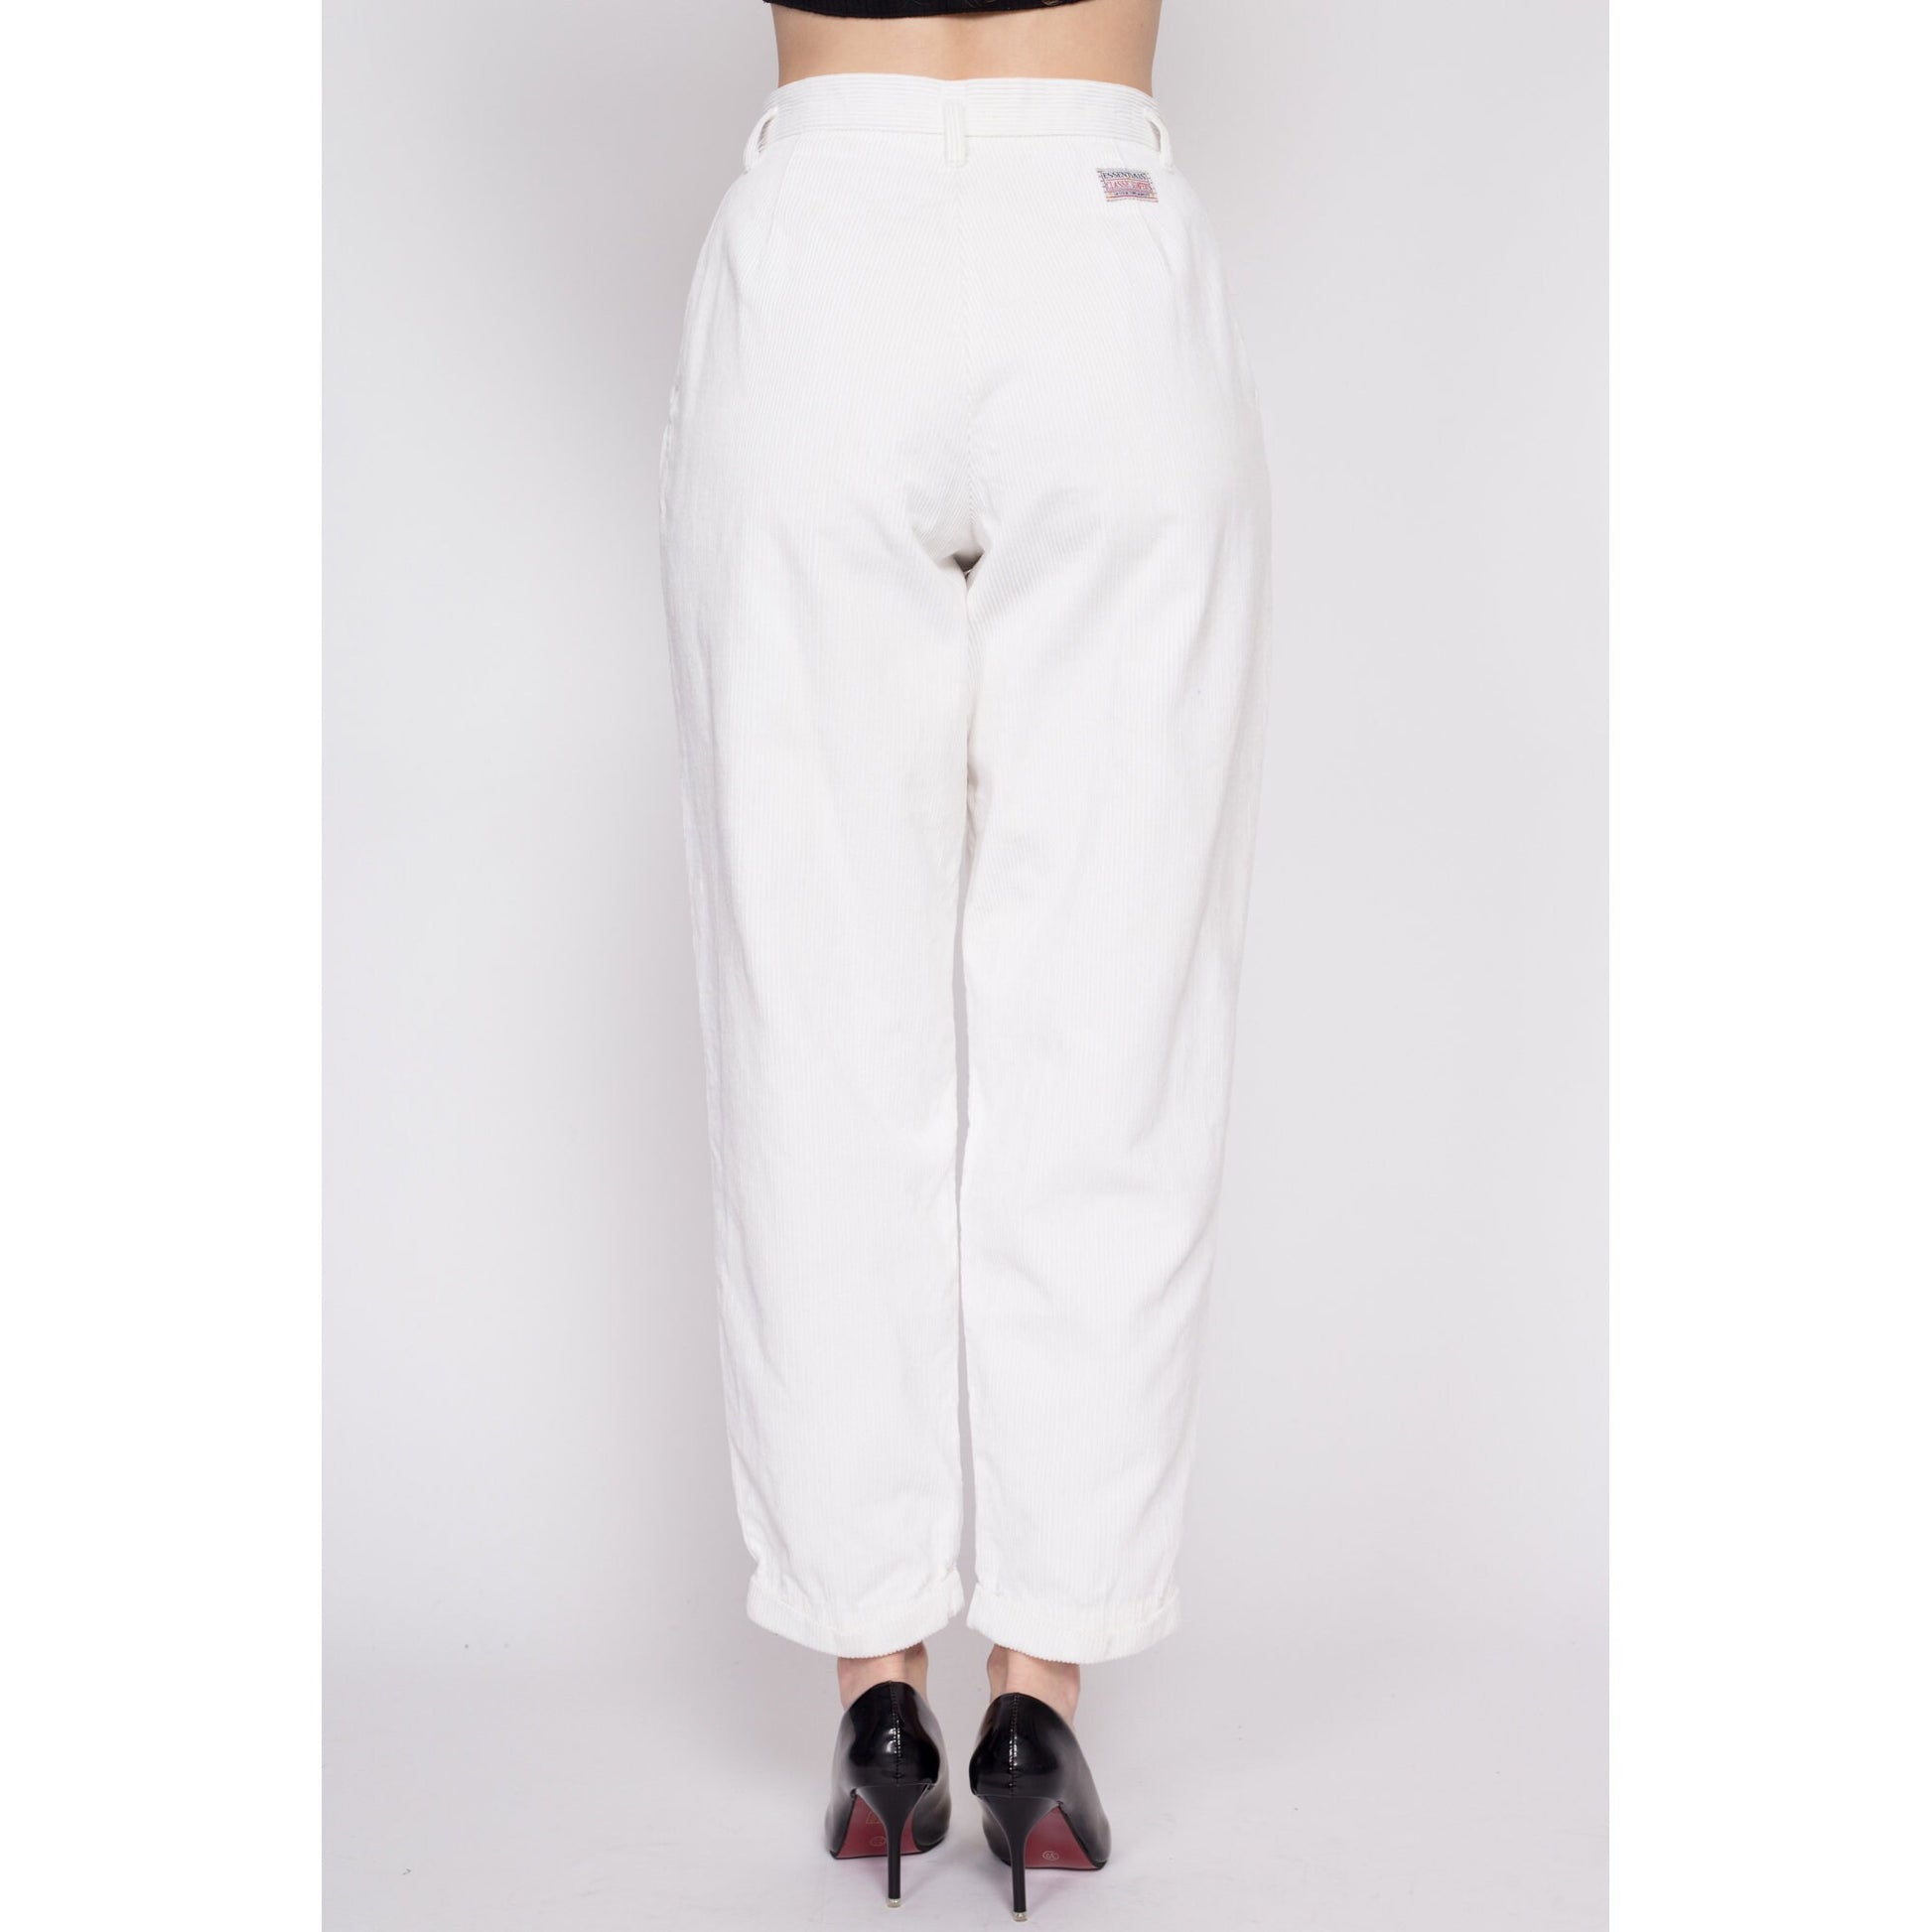 80s White Corduroy High Waisted Pants - Medium, 27.5 – Flying Apple Vintage